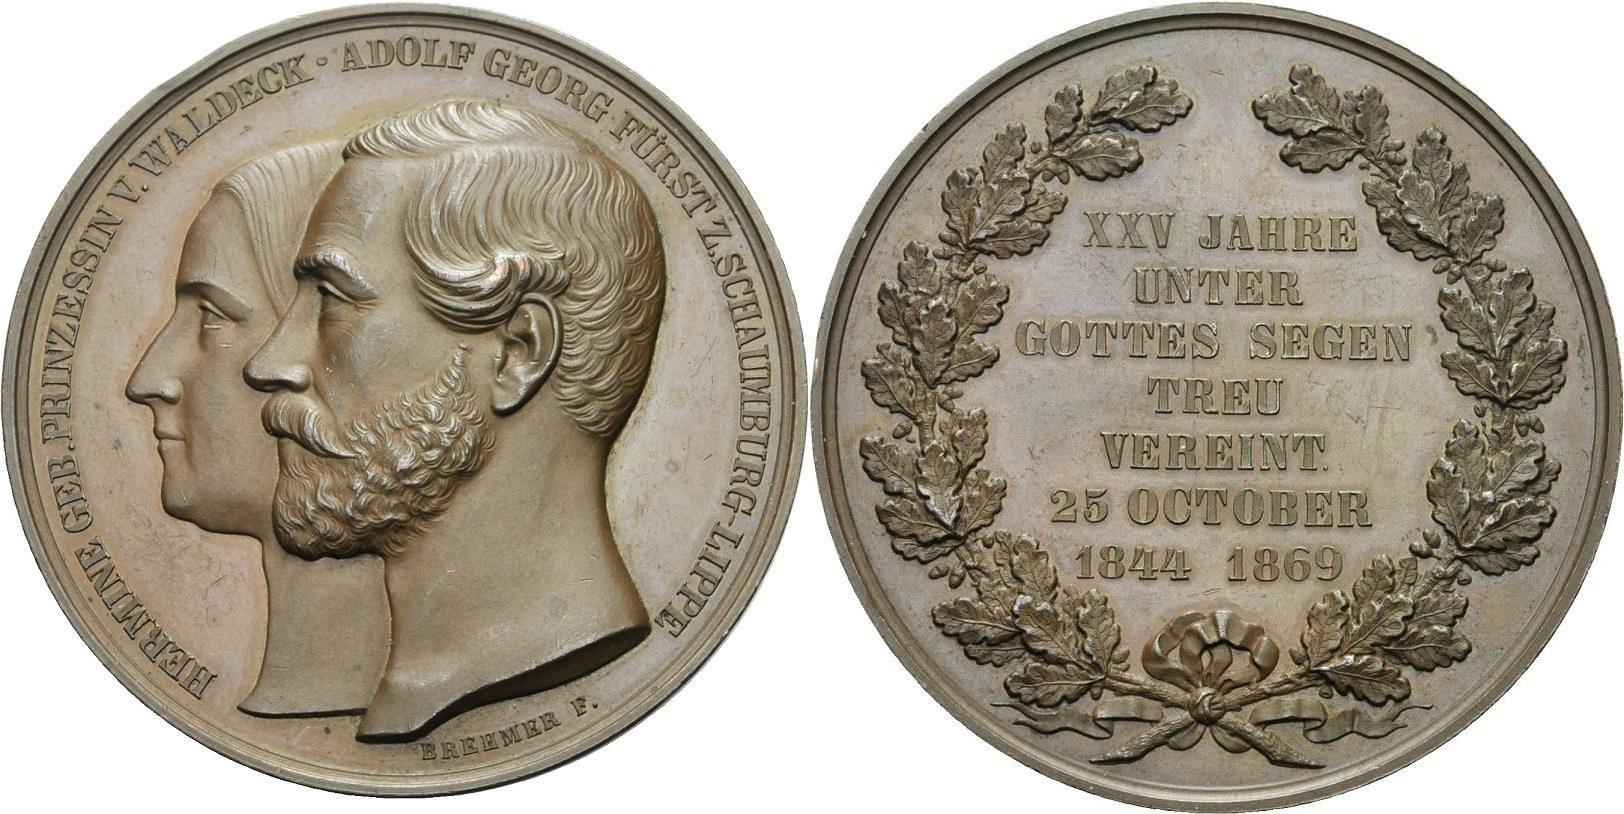 Foto Schaumburg lippe Bronzemedaille 1869